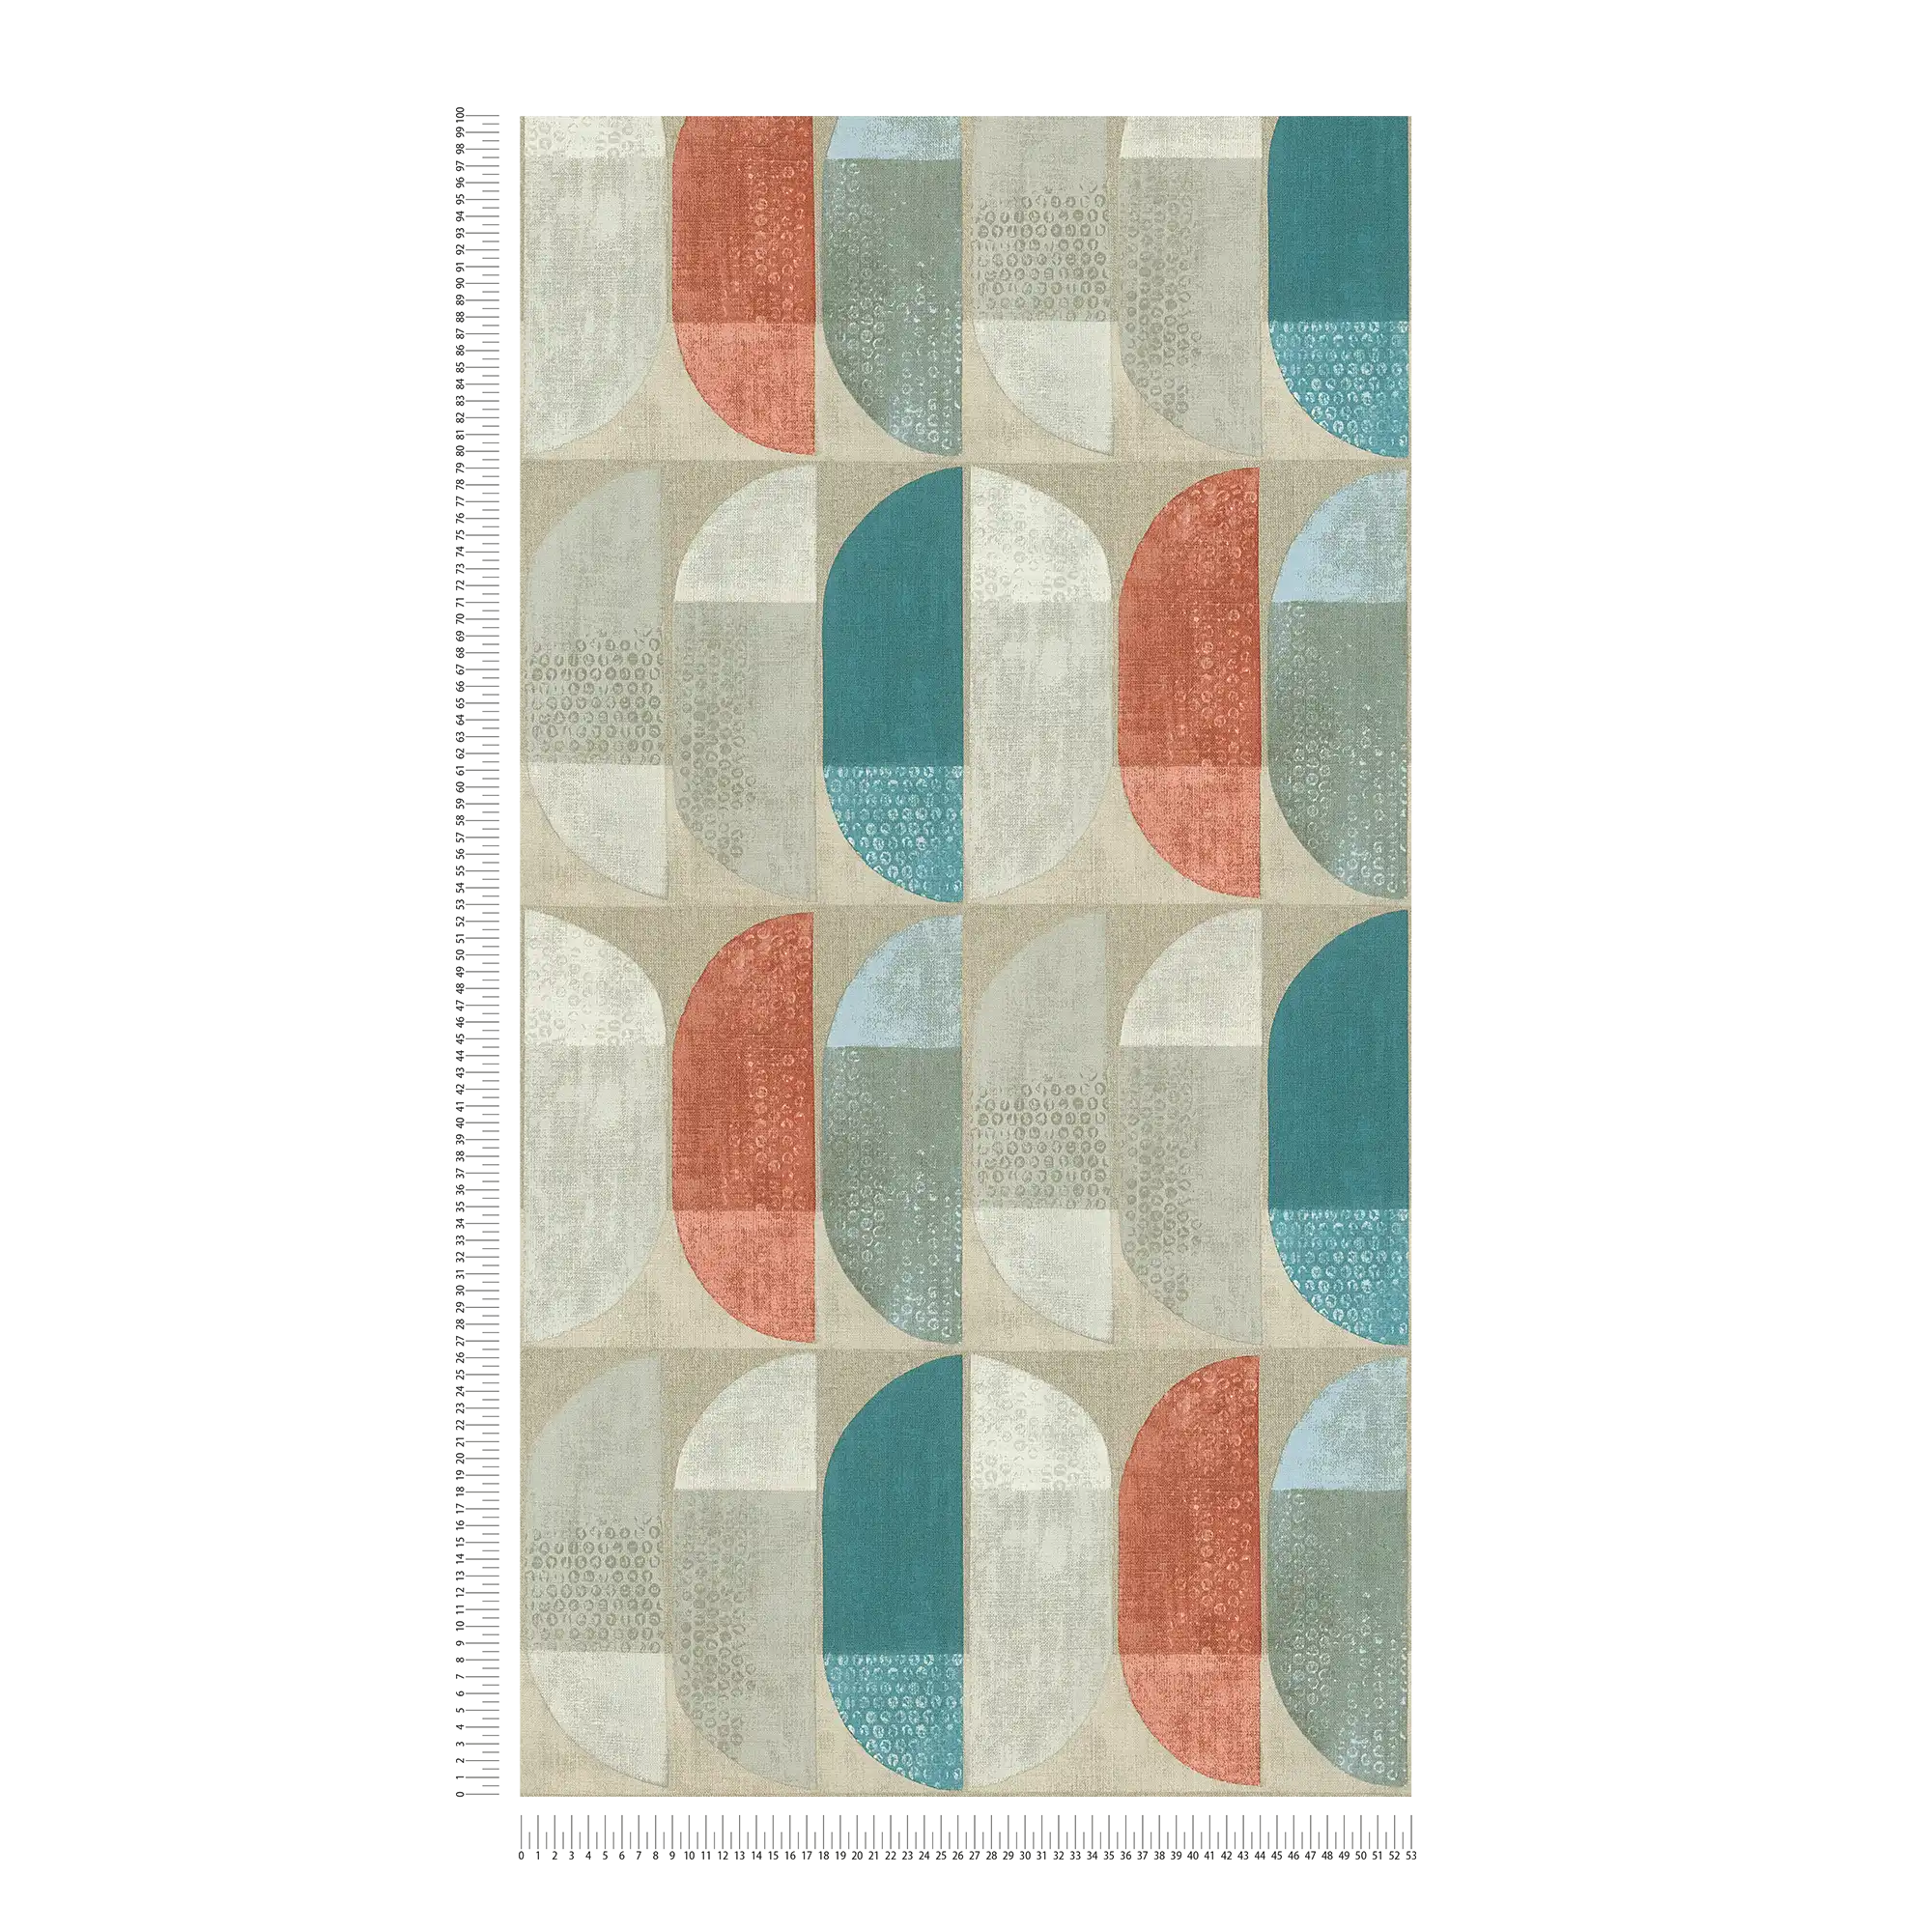             Tapete geometrisches Retro-Muster, Scandinavian Style - Beige, Rot, Blau
        